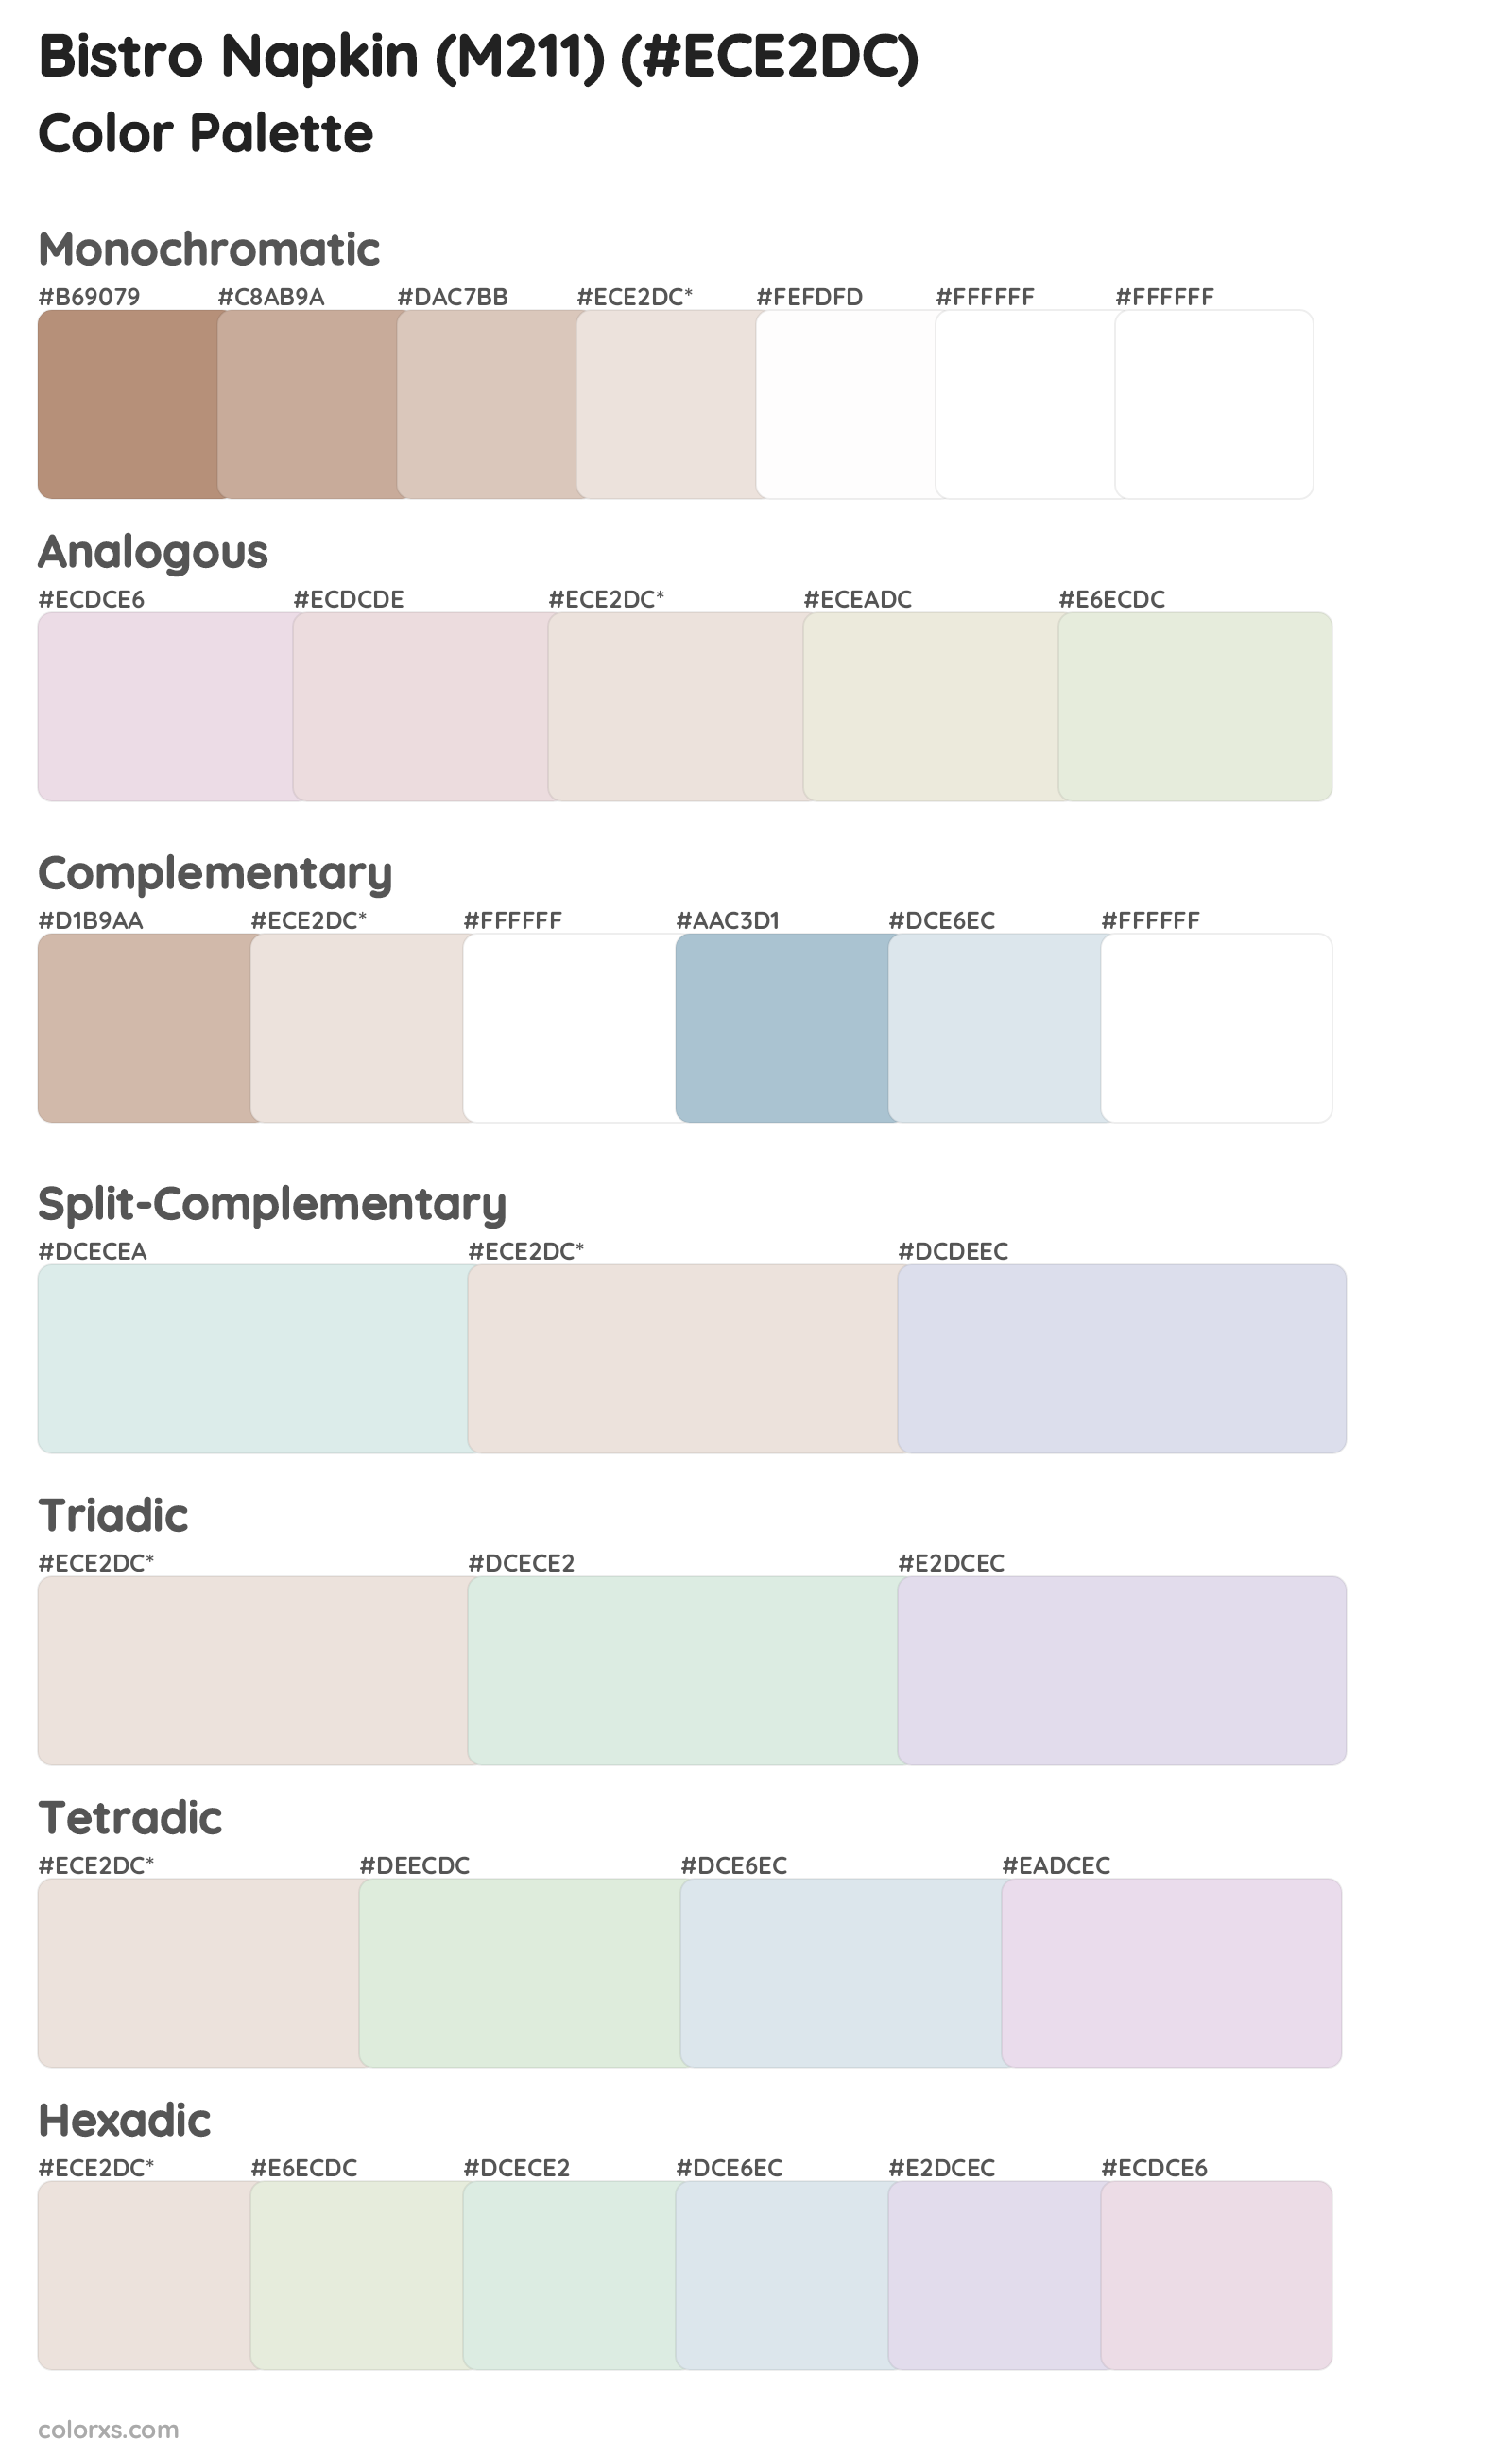 Bistro Napkin (M211) Color Scheme Palettes